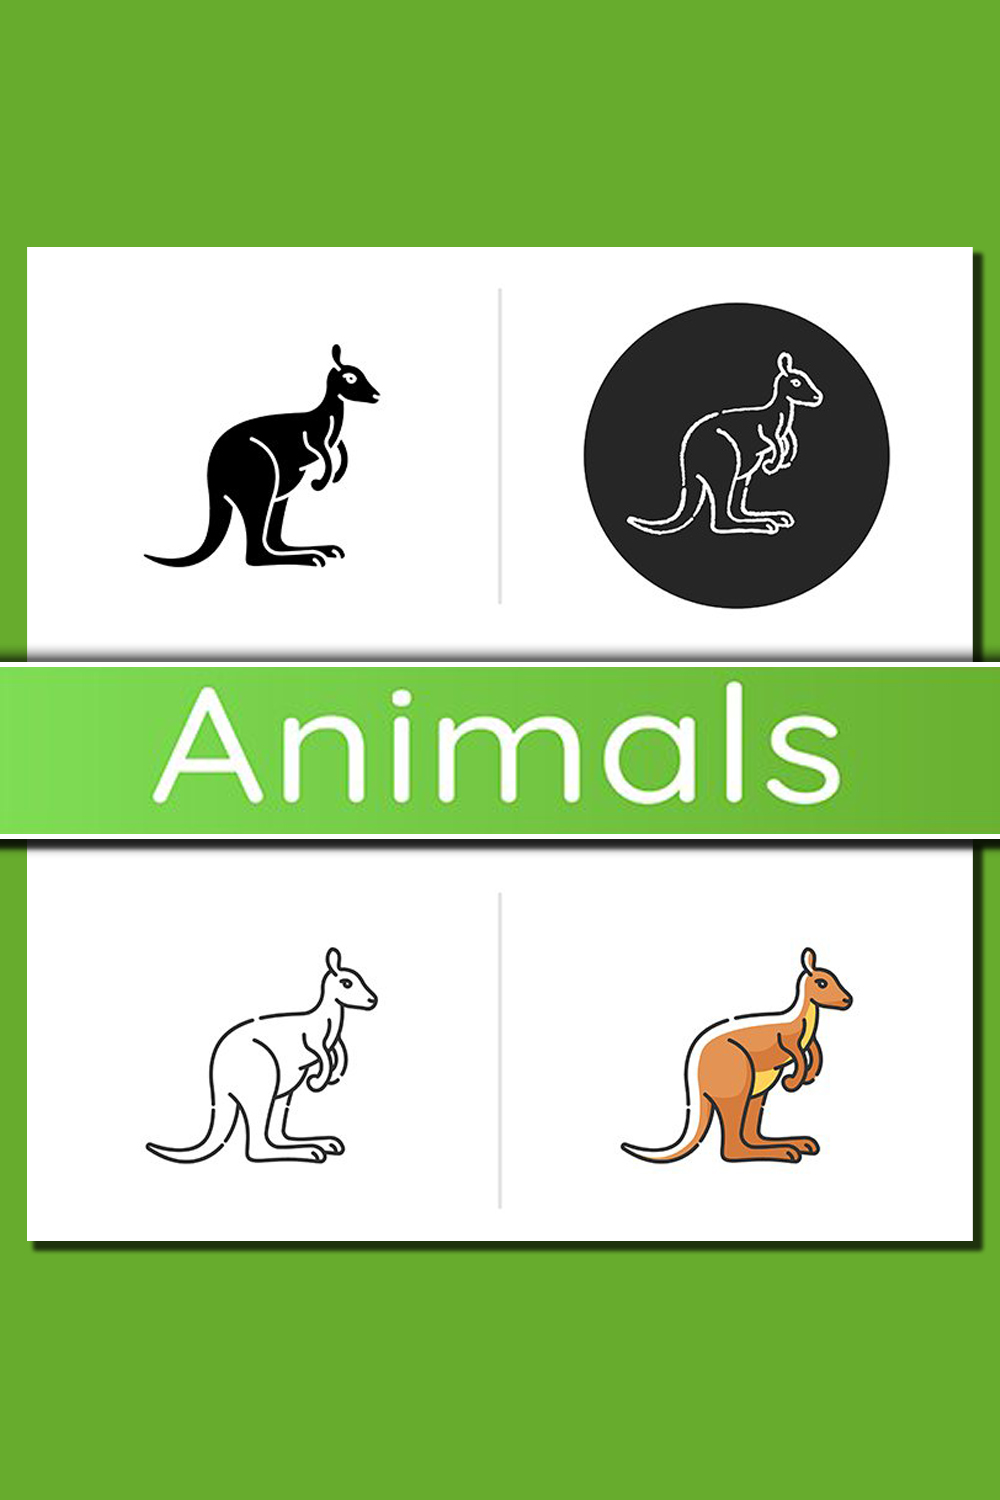 Kangaroo Icon pinterest image.